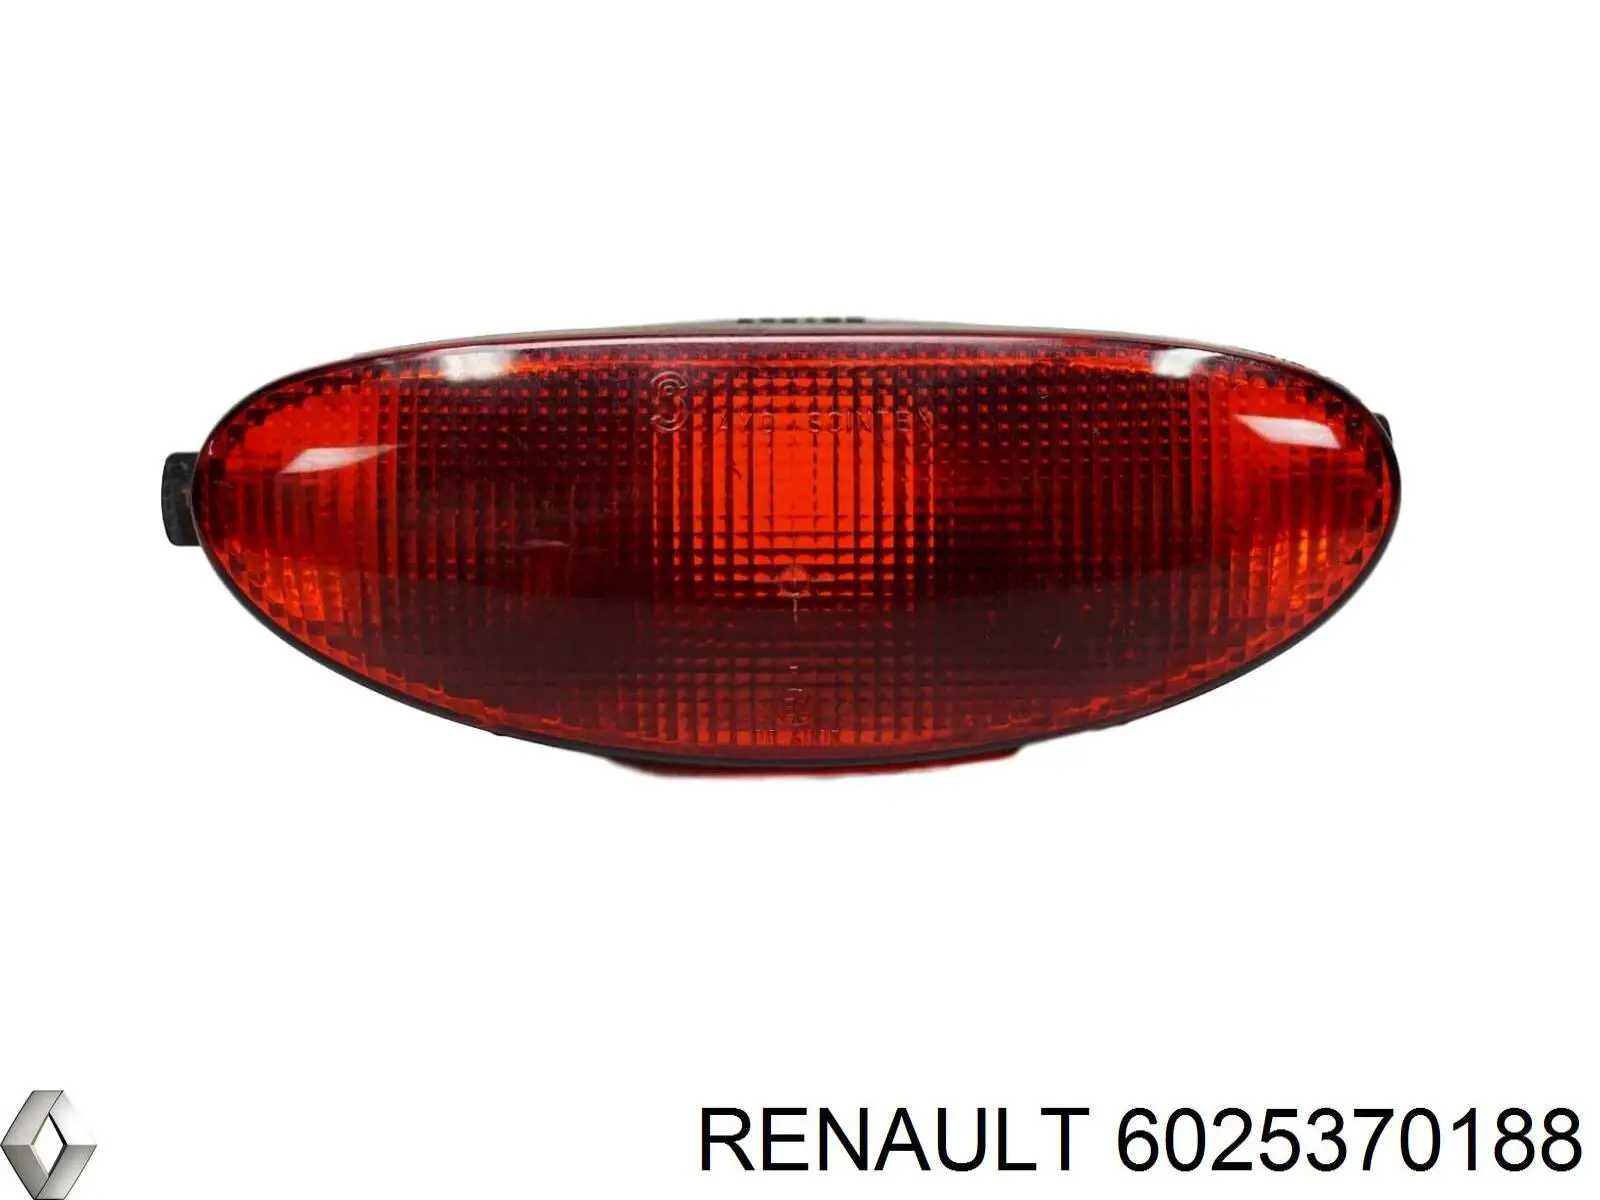 6025370188 Renault (RVI) faro antiniebla trasero derecho